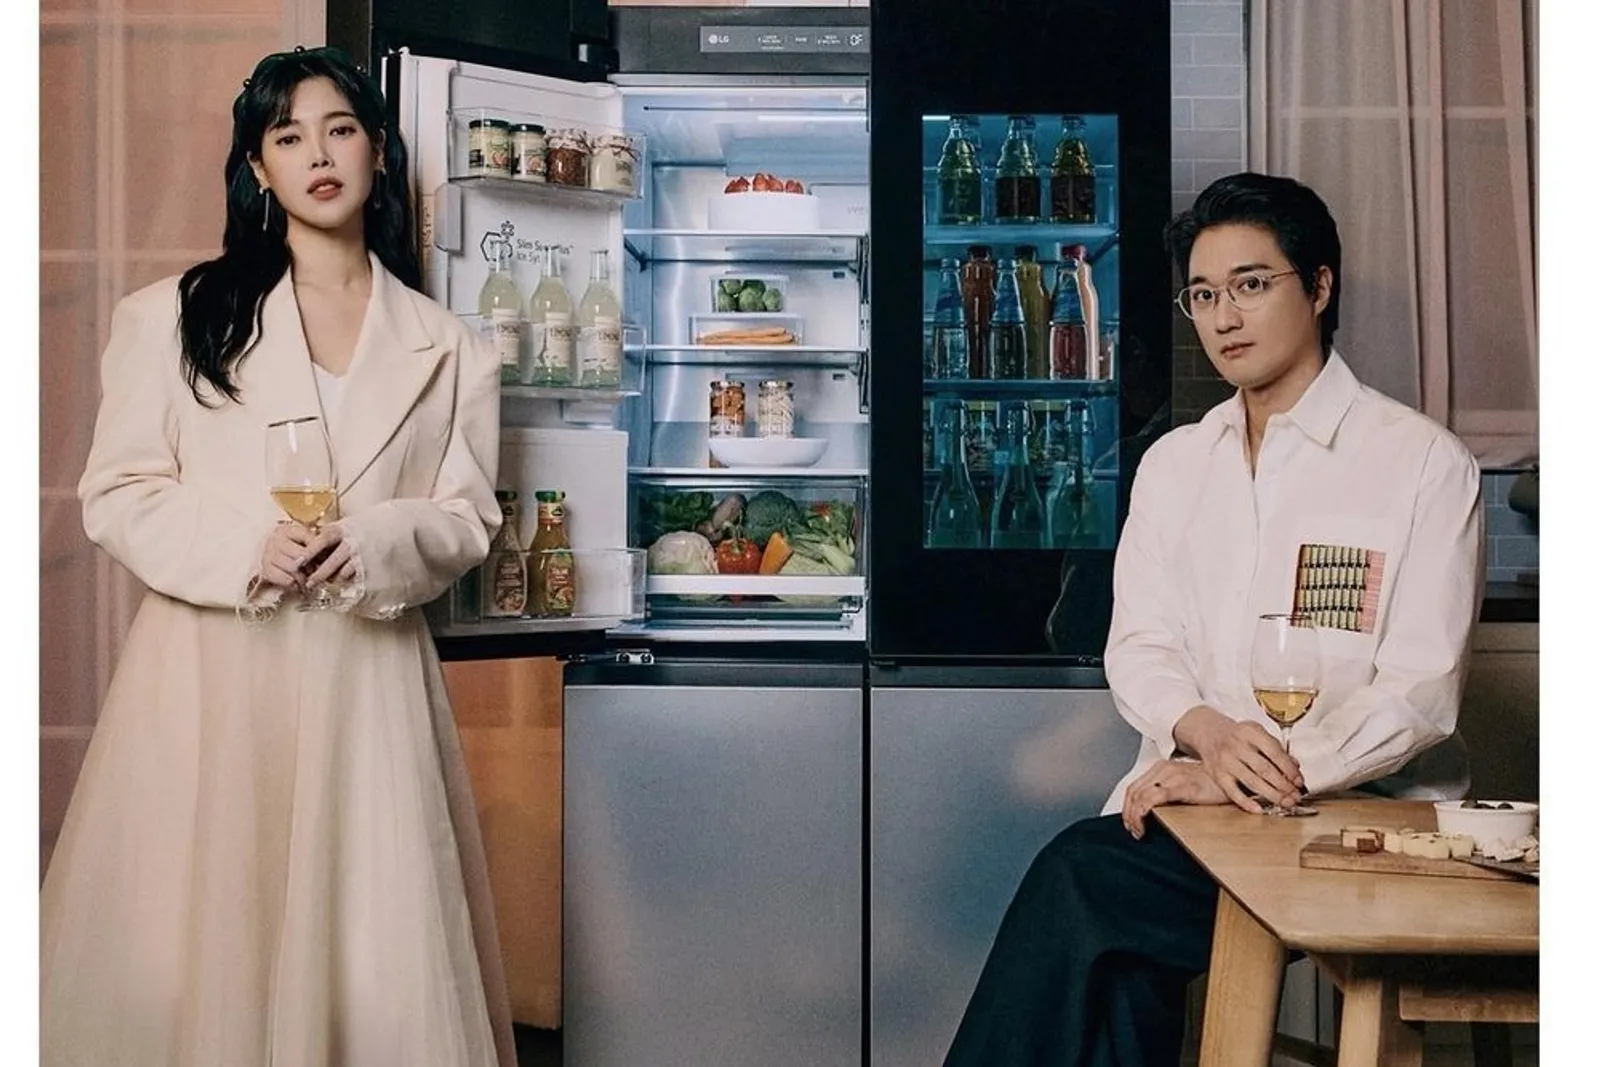 Kisah Cinta Pasangan Seleb yang Viral di Korea, Romantis & Lucu Banget